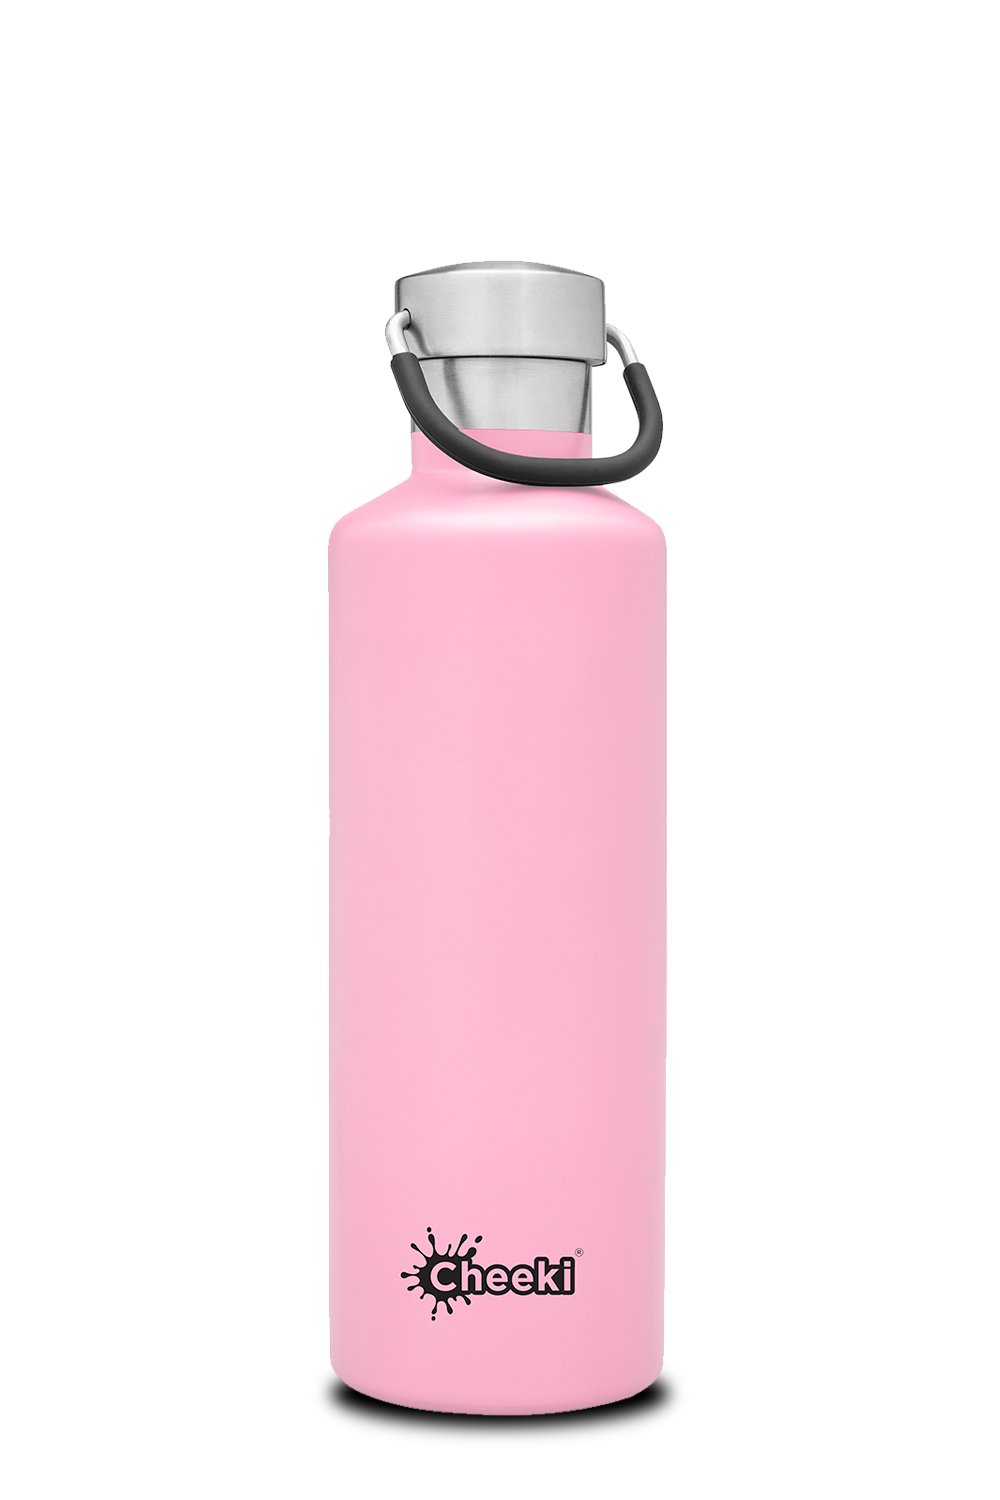 Cheeki Classic Insulated Bottle Stainless Steel Pink 600ml